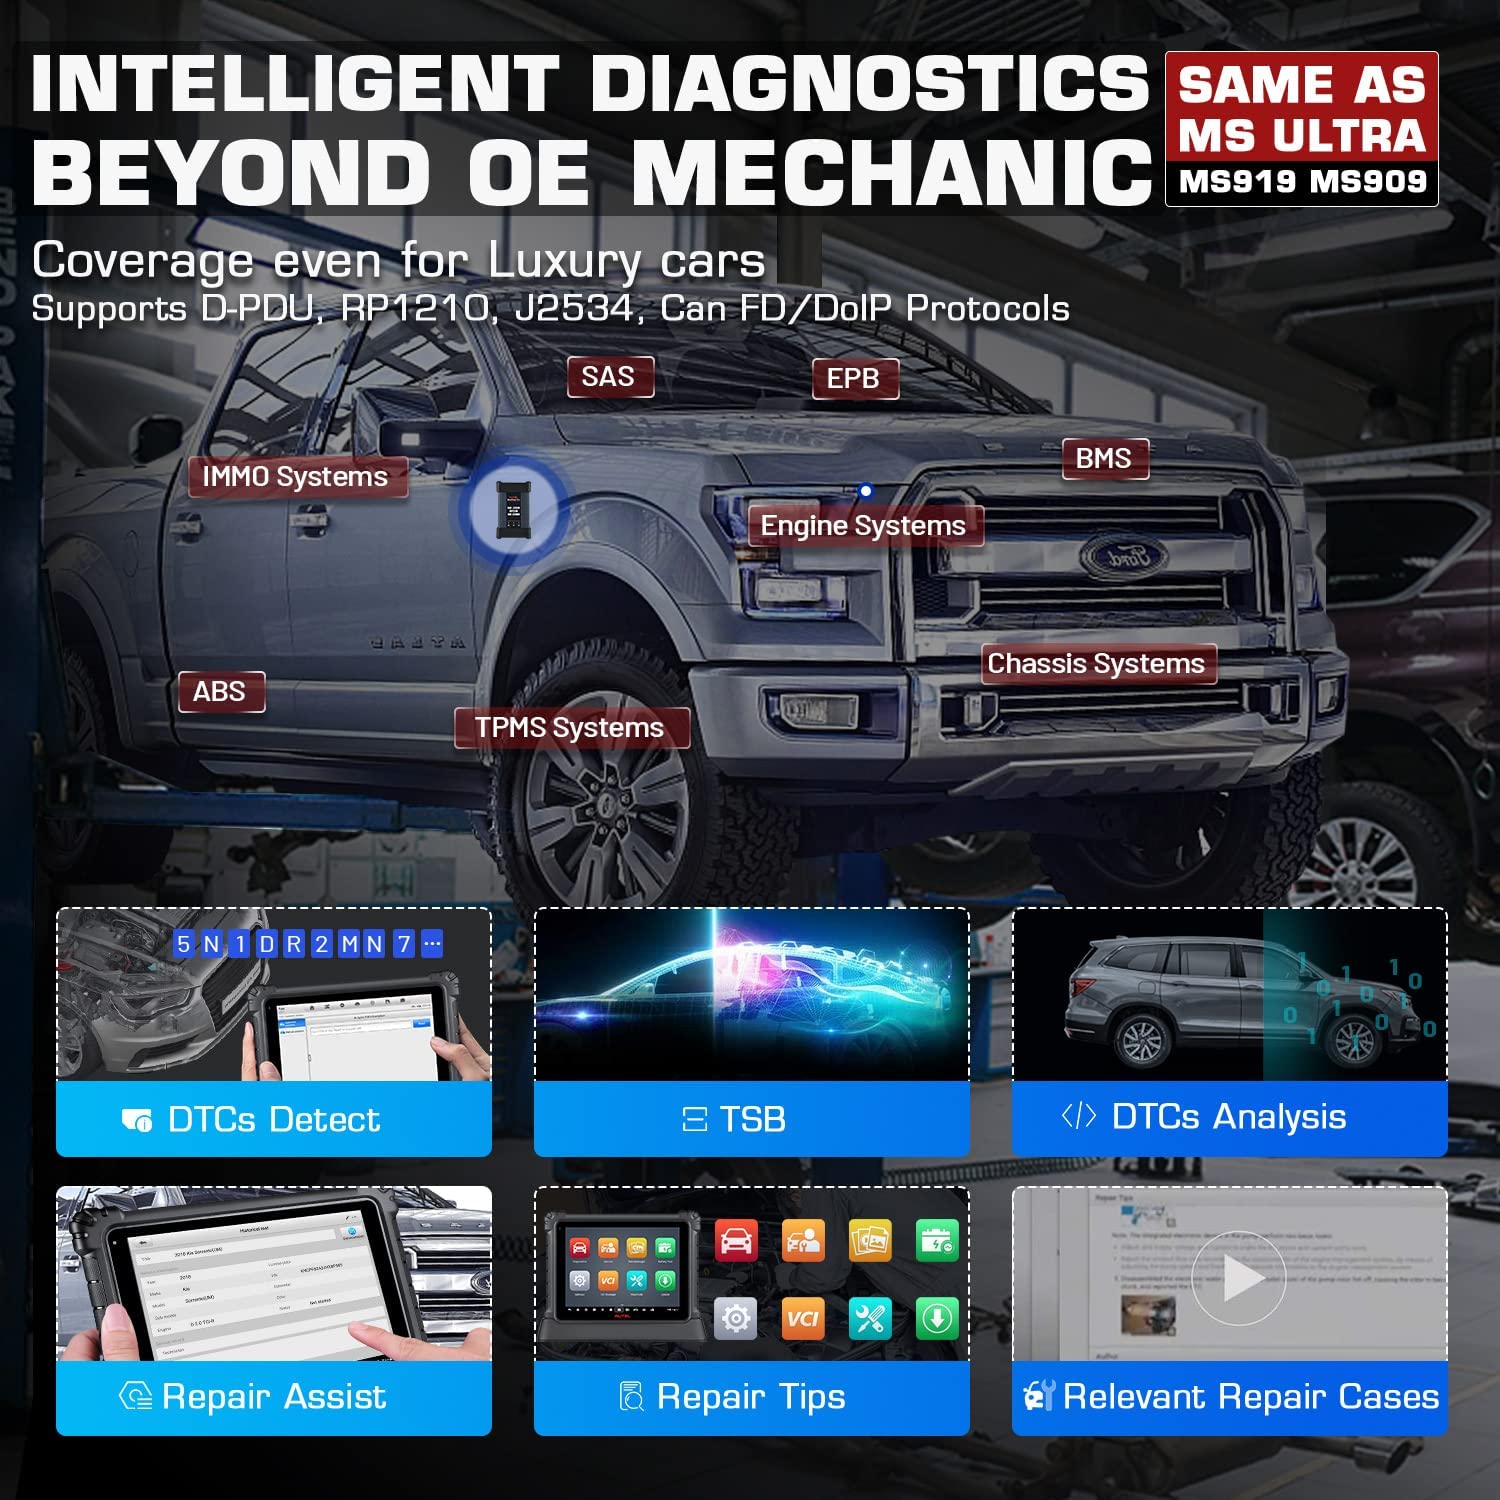 Autel Maxisys Ultra Lite 2022 is intelligent diagnostics tool